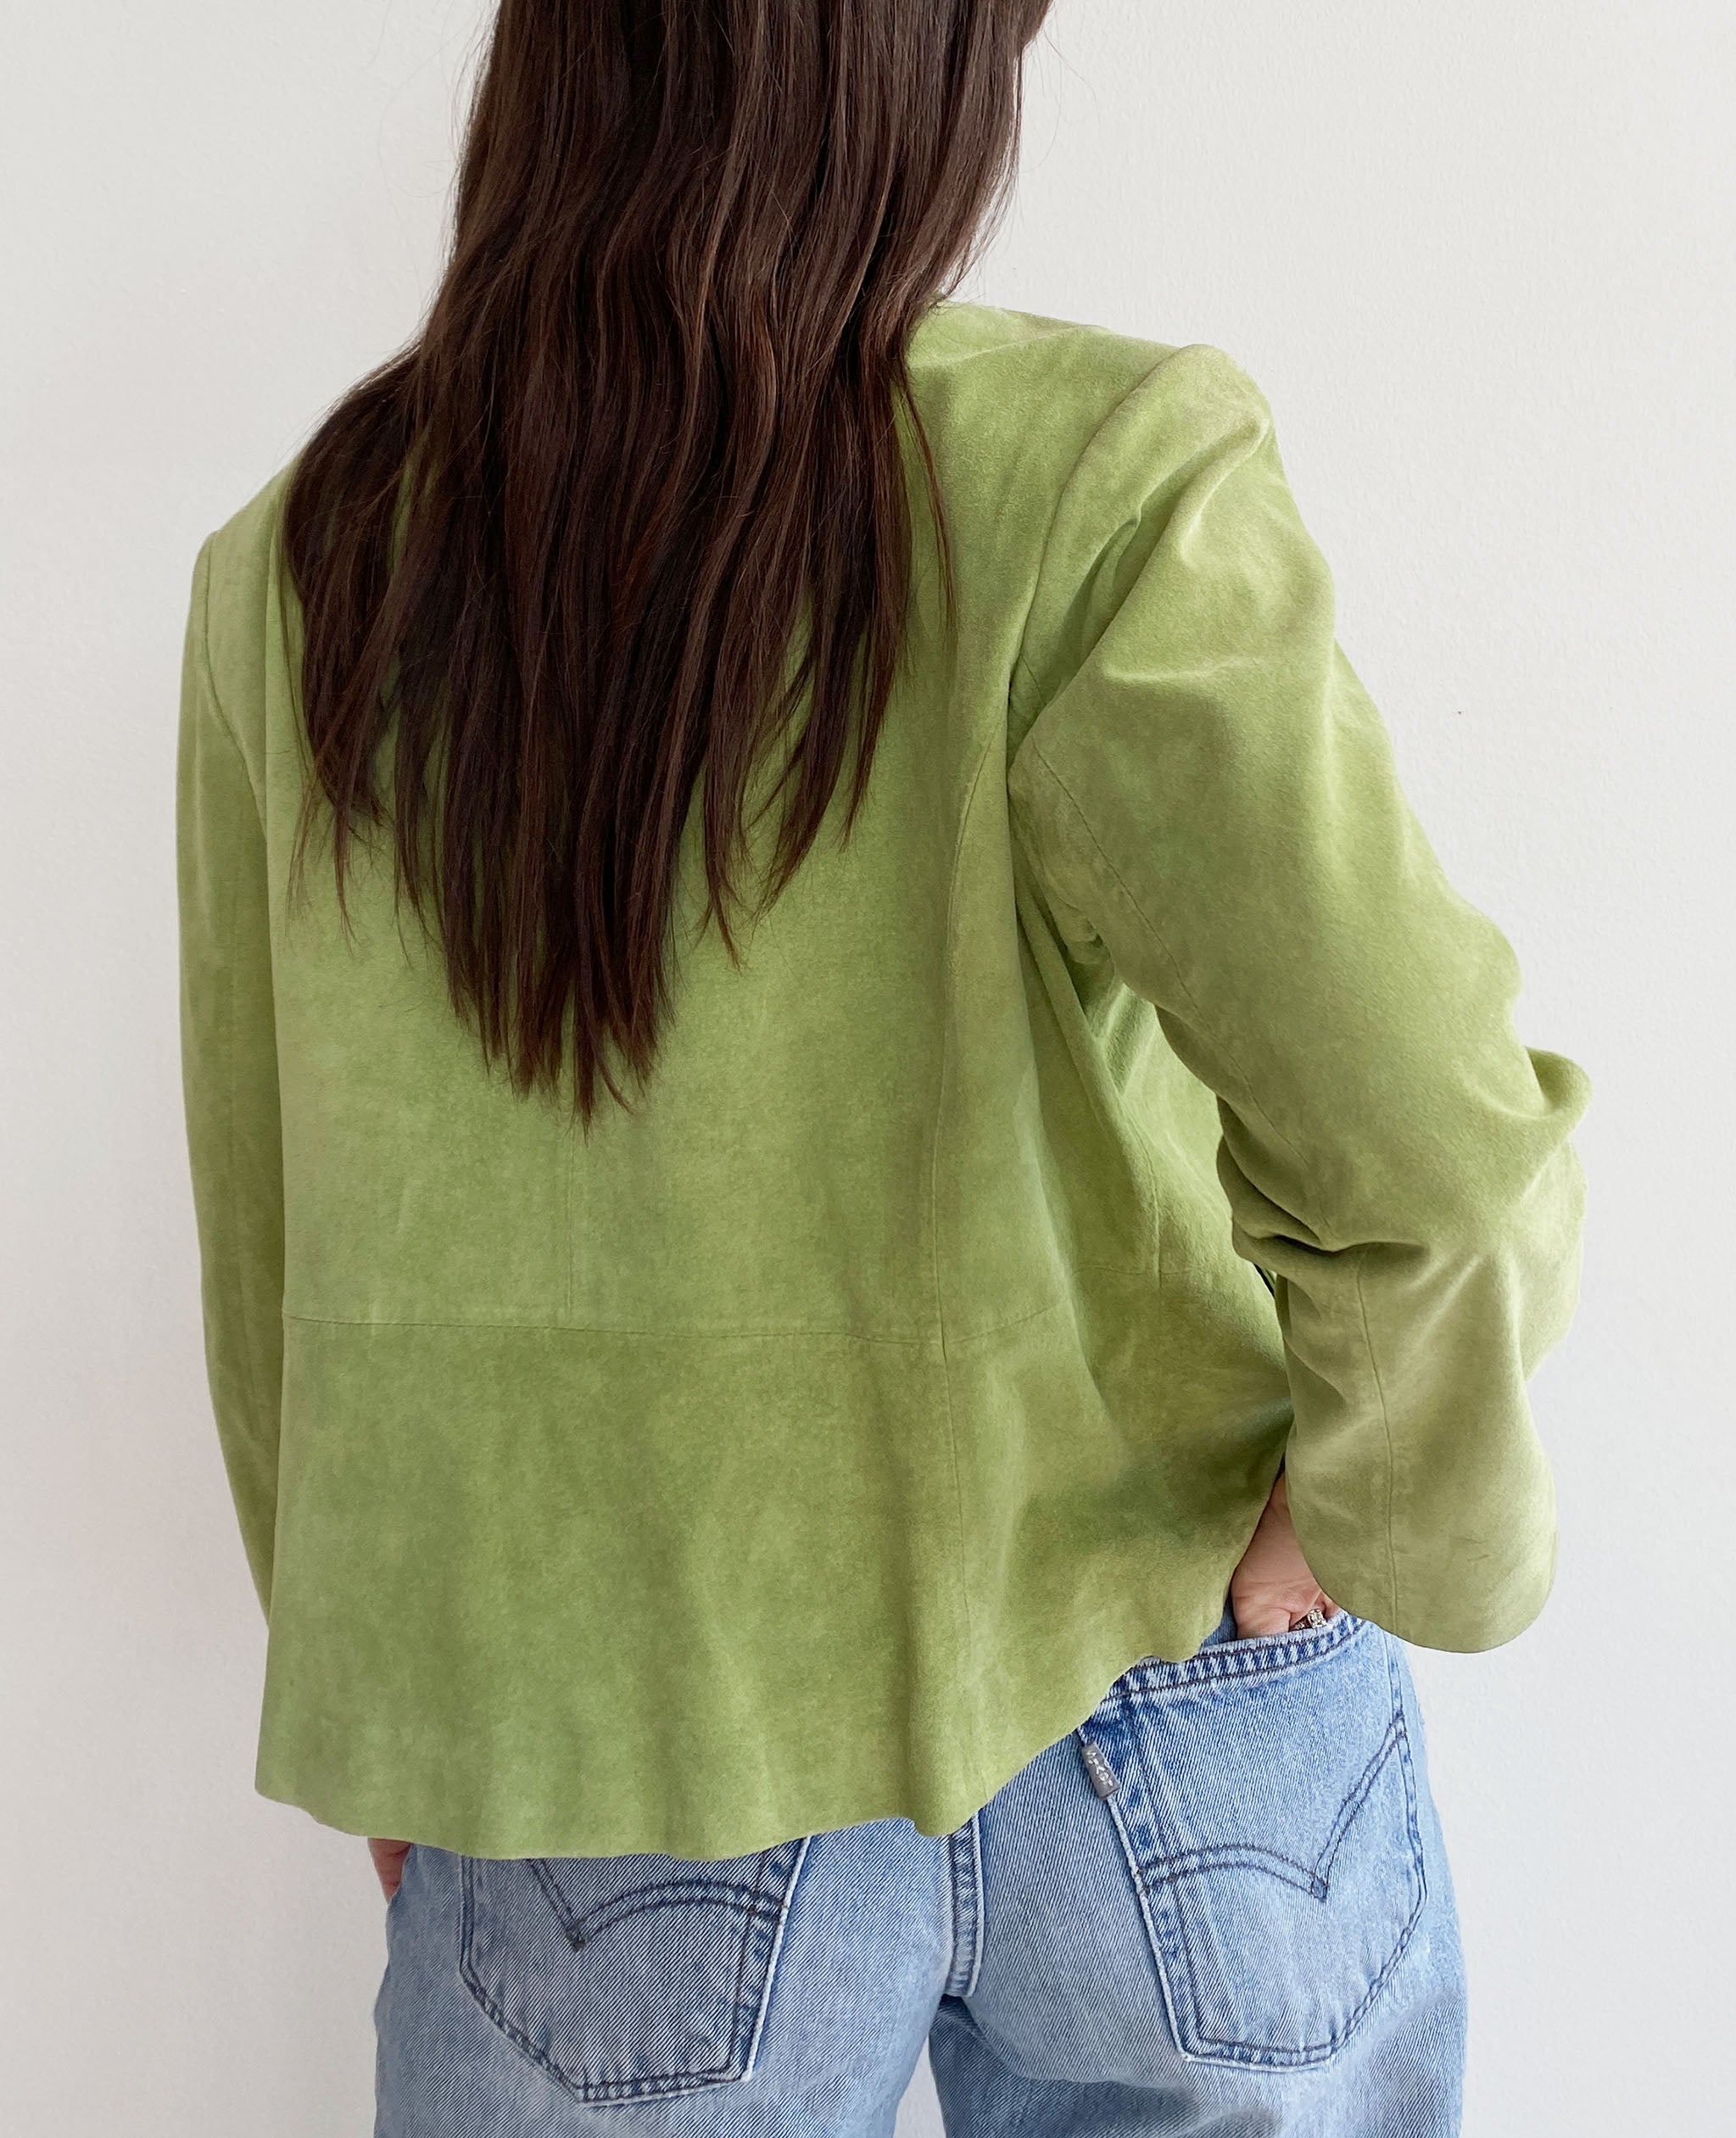 Green Suede Jacket